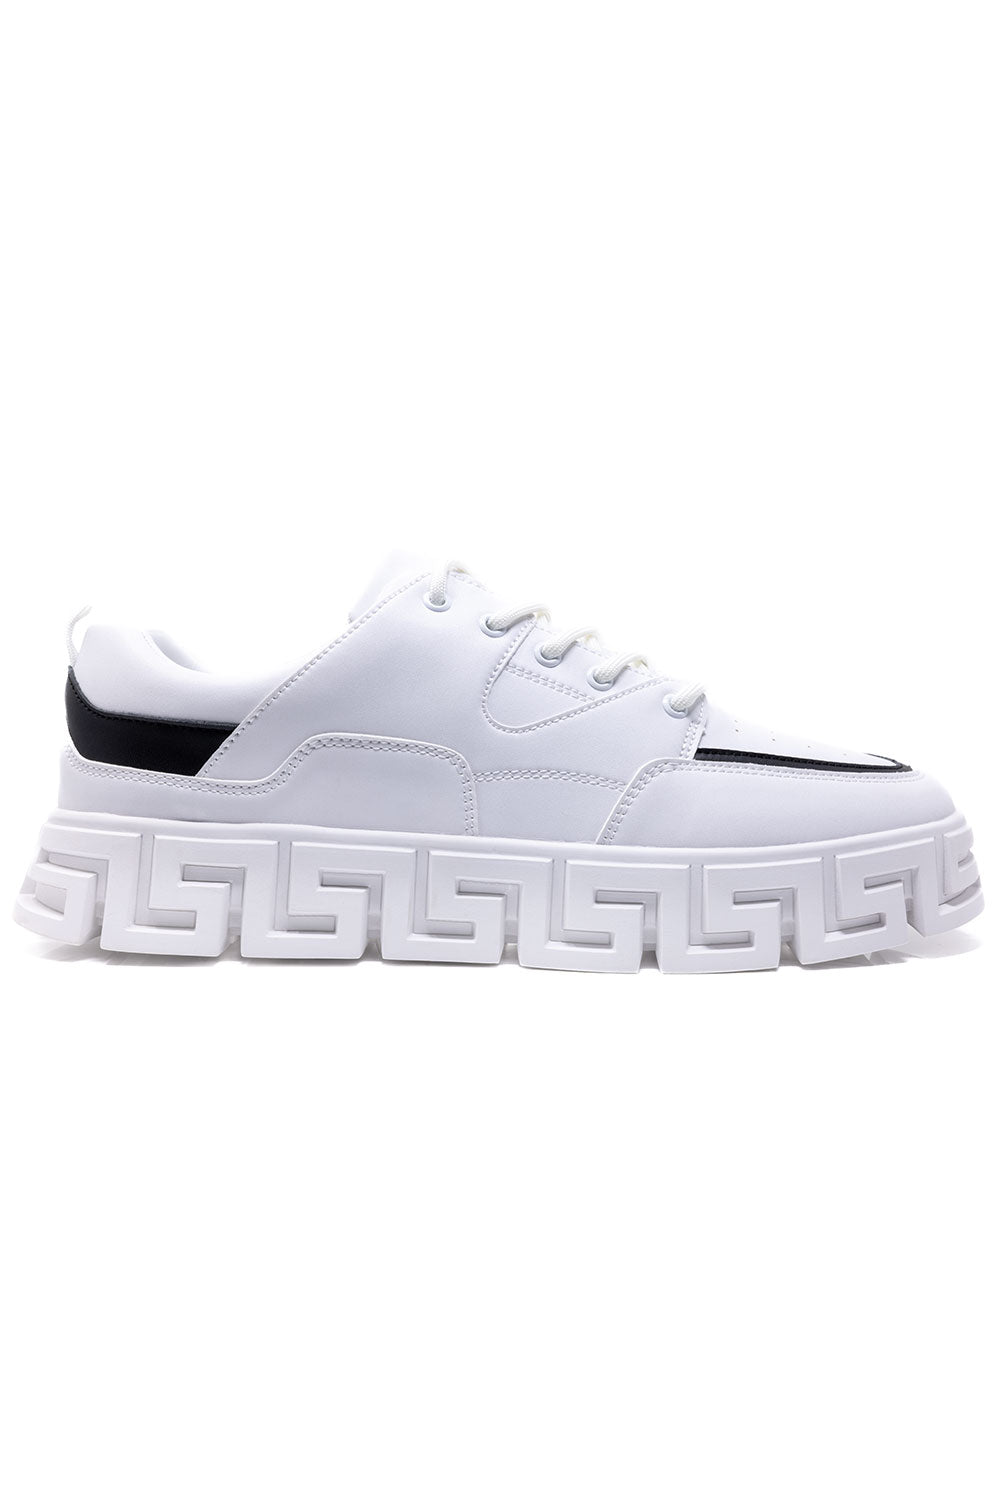 Barabas Men's Premium Greek Key Pattern Walking Sneakers 4SK03 White